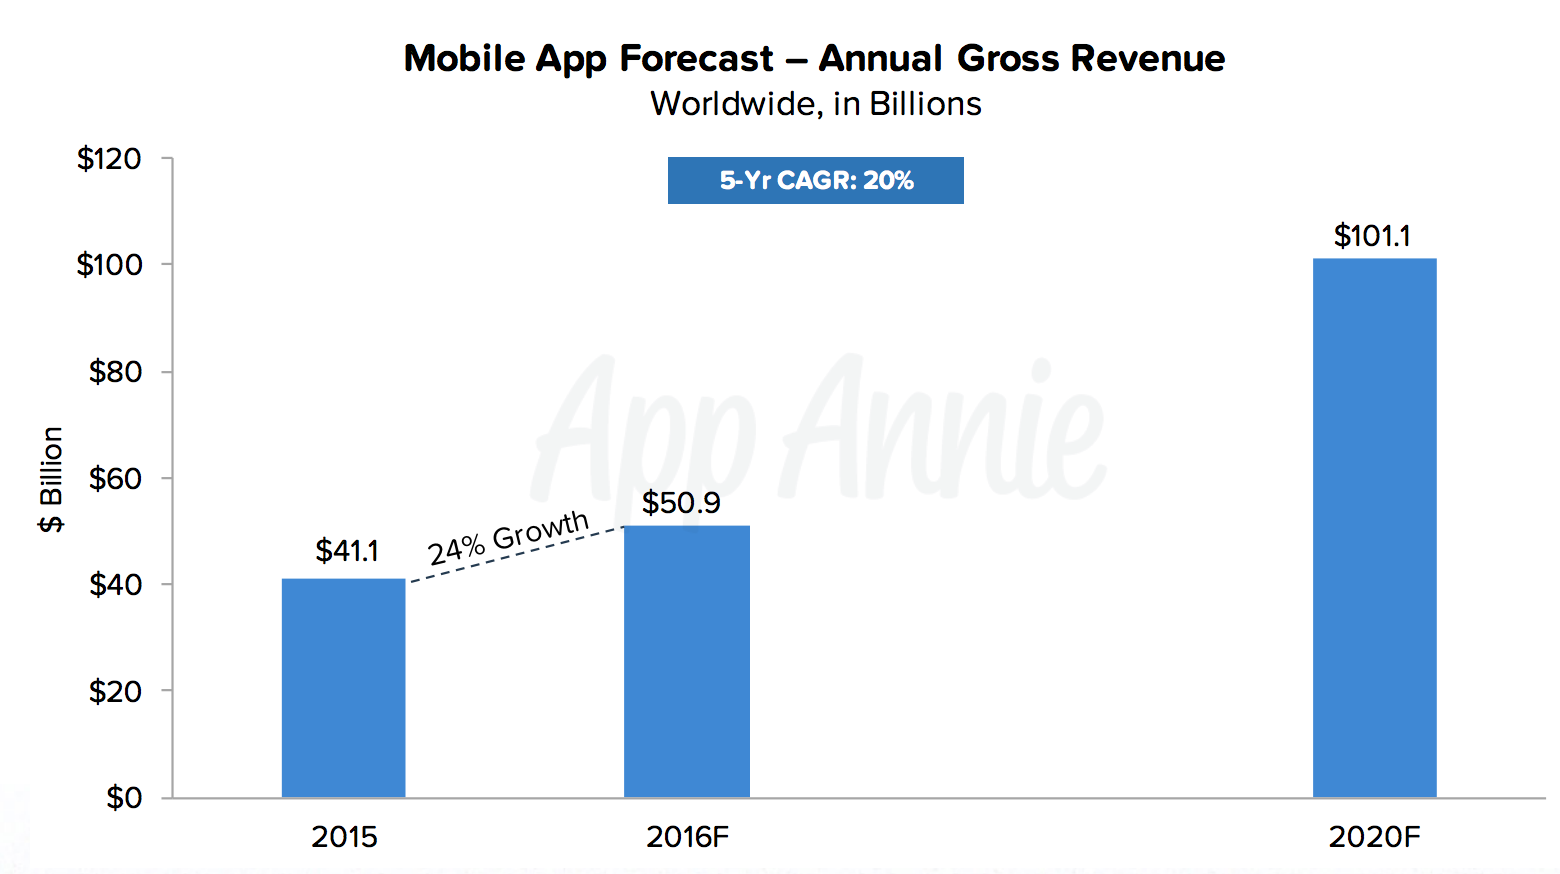 Mobile App Forecast Annual Gross Revenue